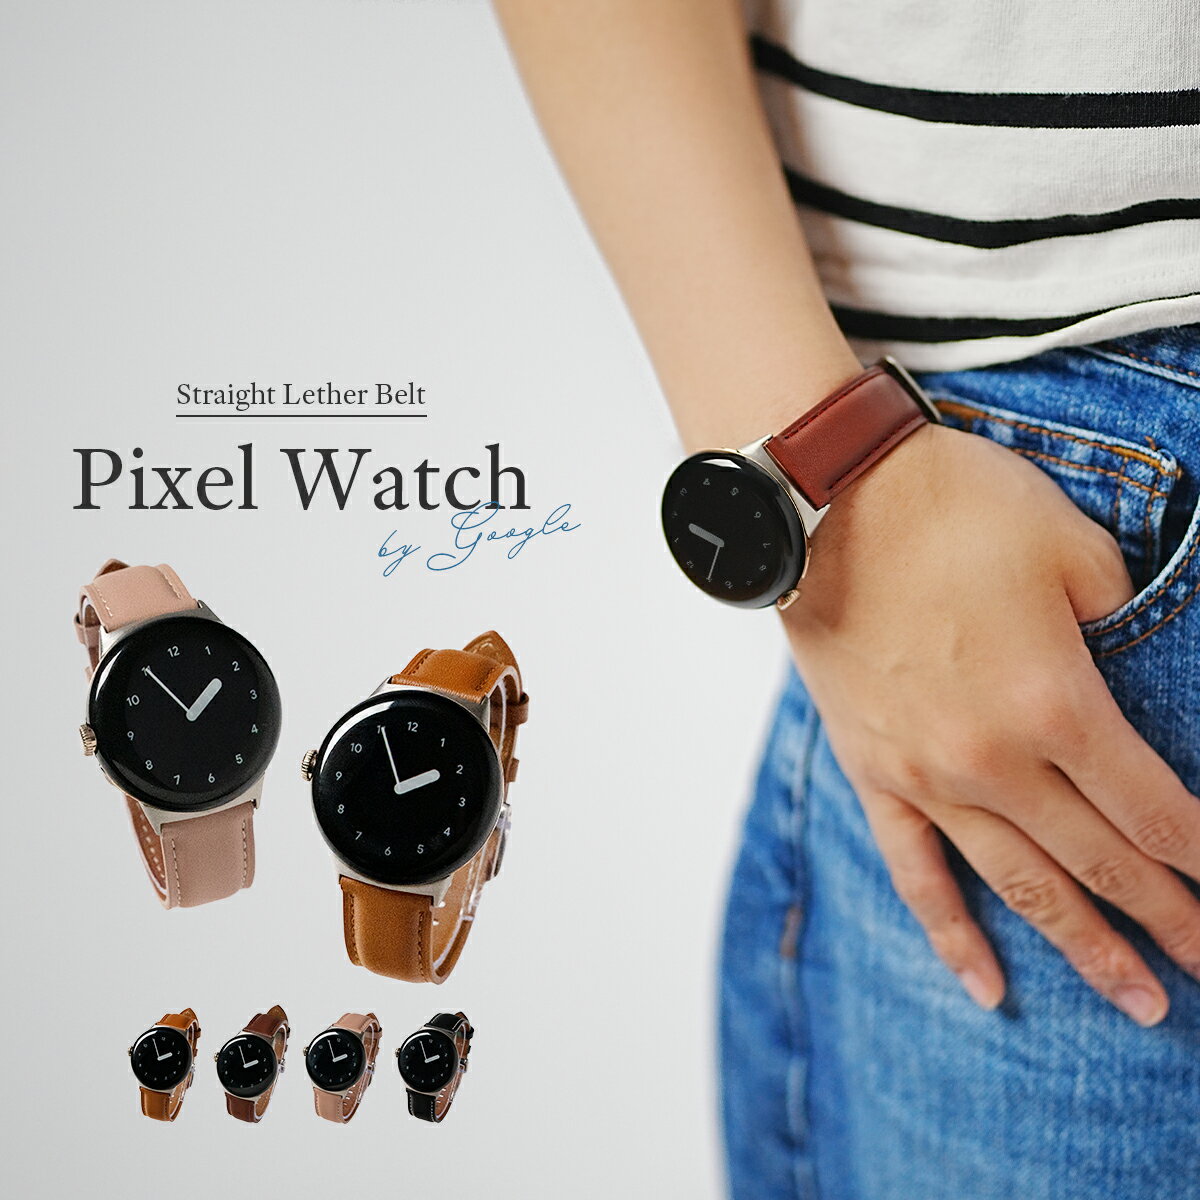  Pixel Watch レザーバンド 革 Pixel Watch ピクセルウォッチ ピクセル バンド Pixel Watch ケース Google Pixel Watch ベルト Google Pixel Watch バンド グーグル ウオッチ レディース 女性